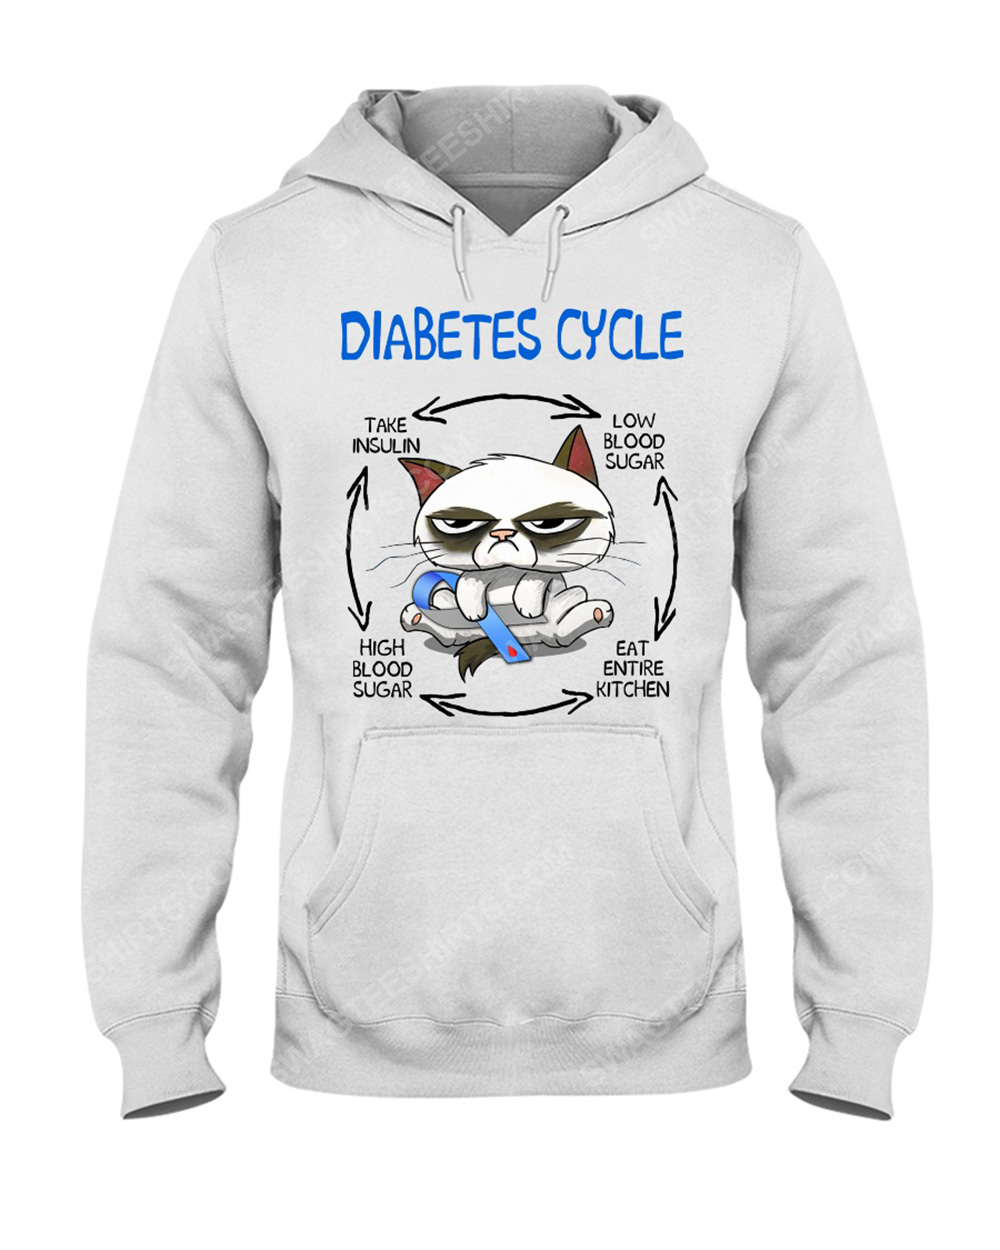 Cat diabetes cycle take insulin high blood sugar eat entire kitchen hoodie 1